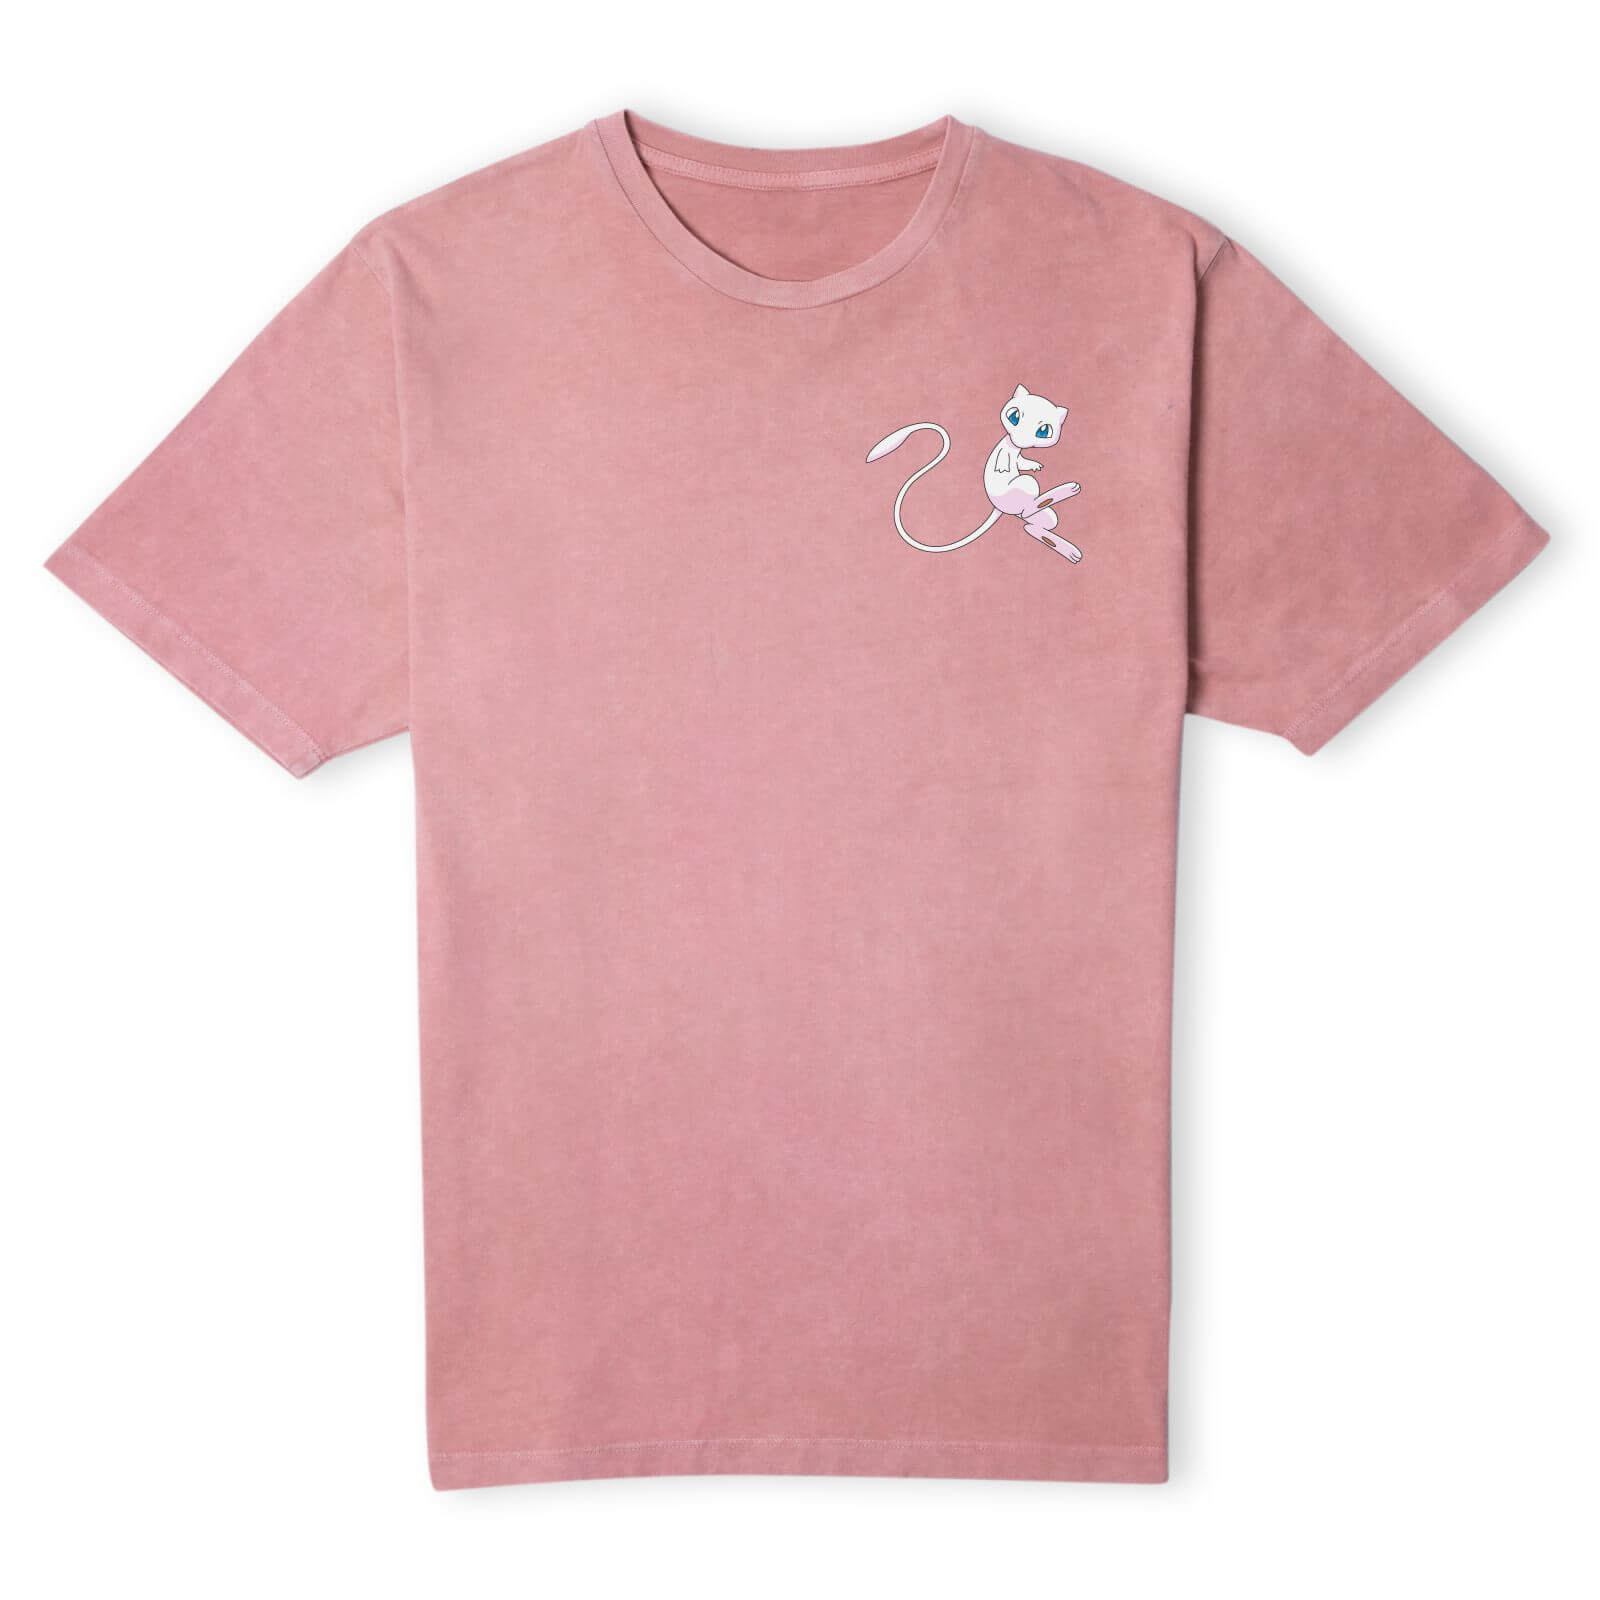 pokmon mew unisex t-shirt - pink acid wash - m - pink acid wash